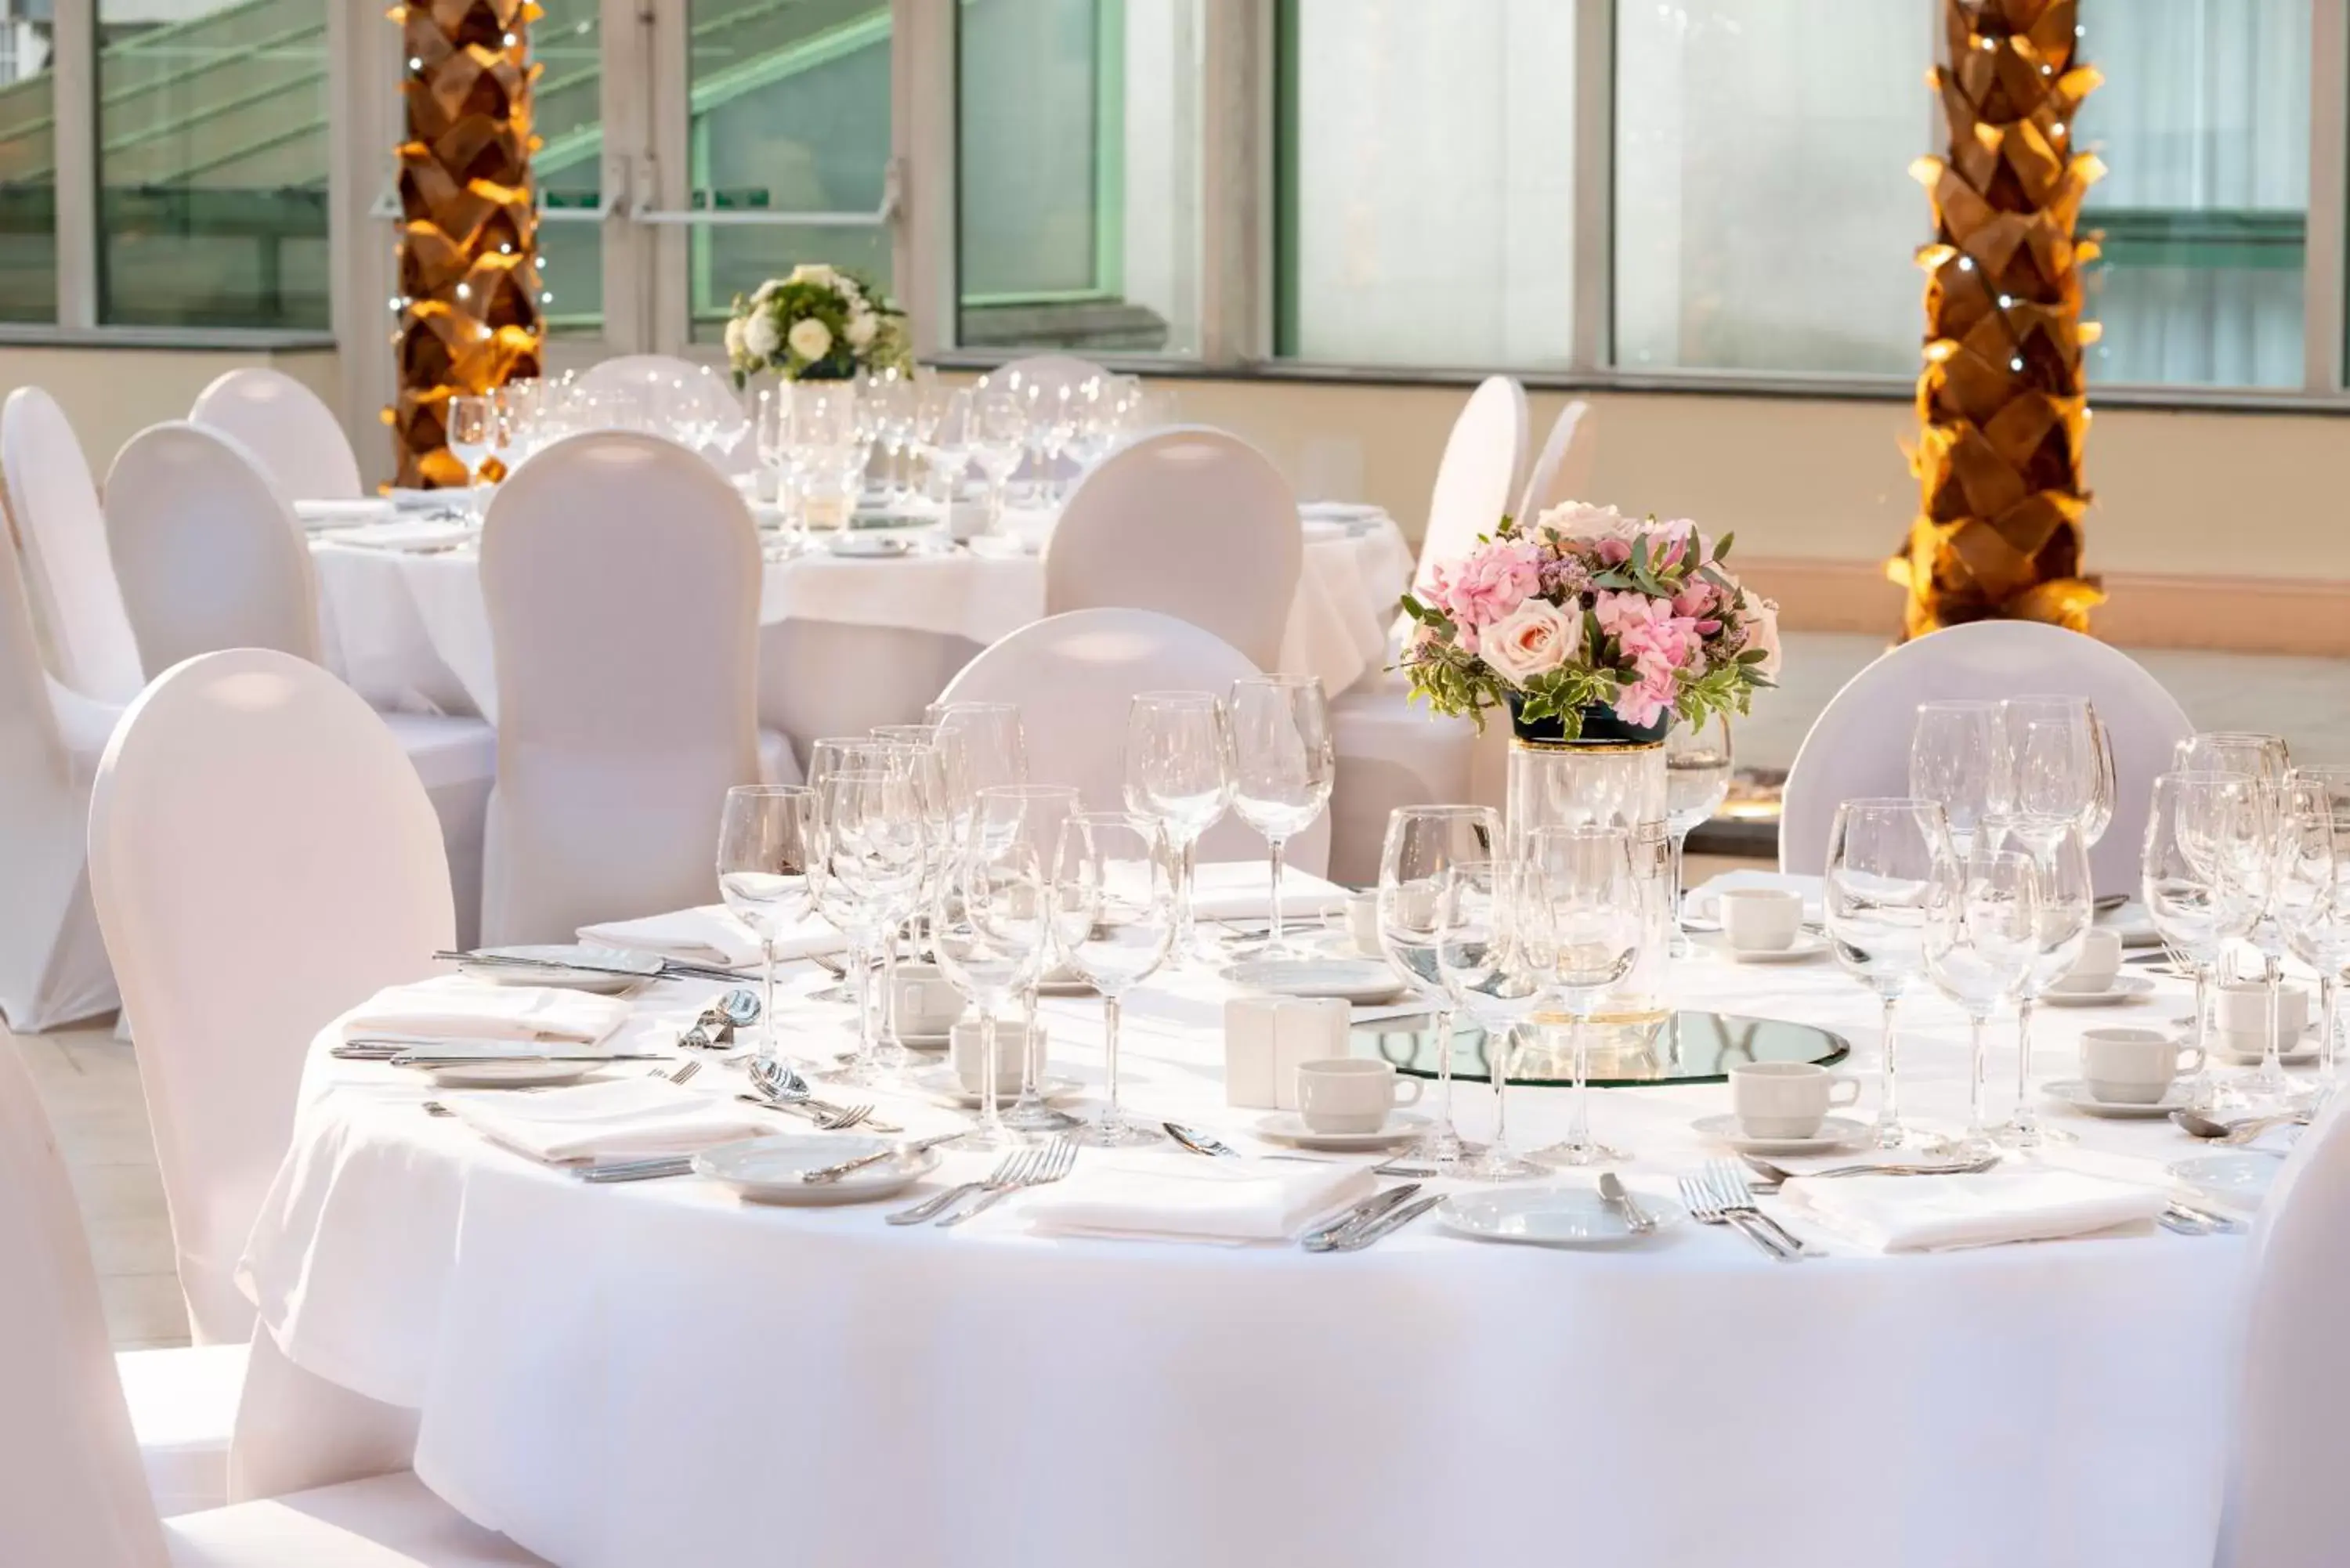 Banquet/Function facilities, Banquet Facilities in Millennium Gloucester Hotel London